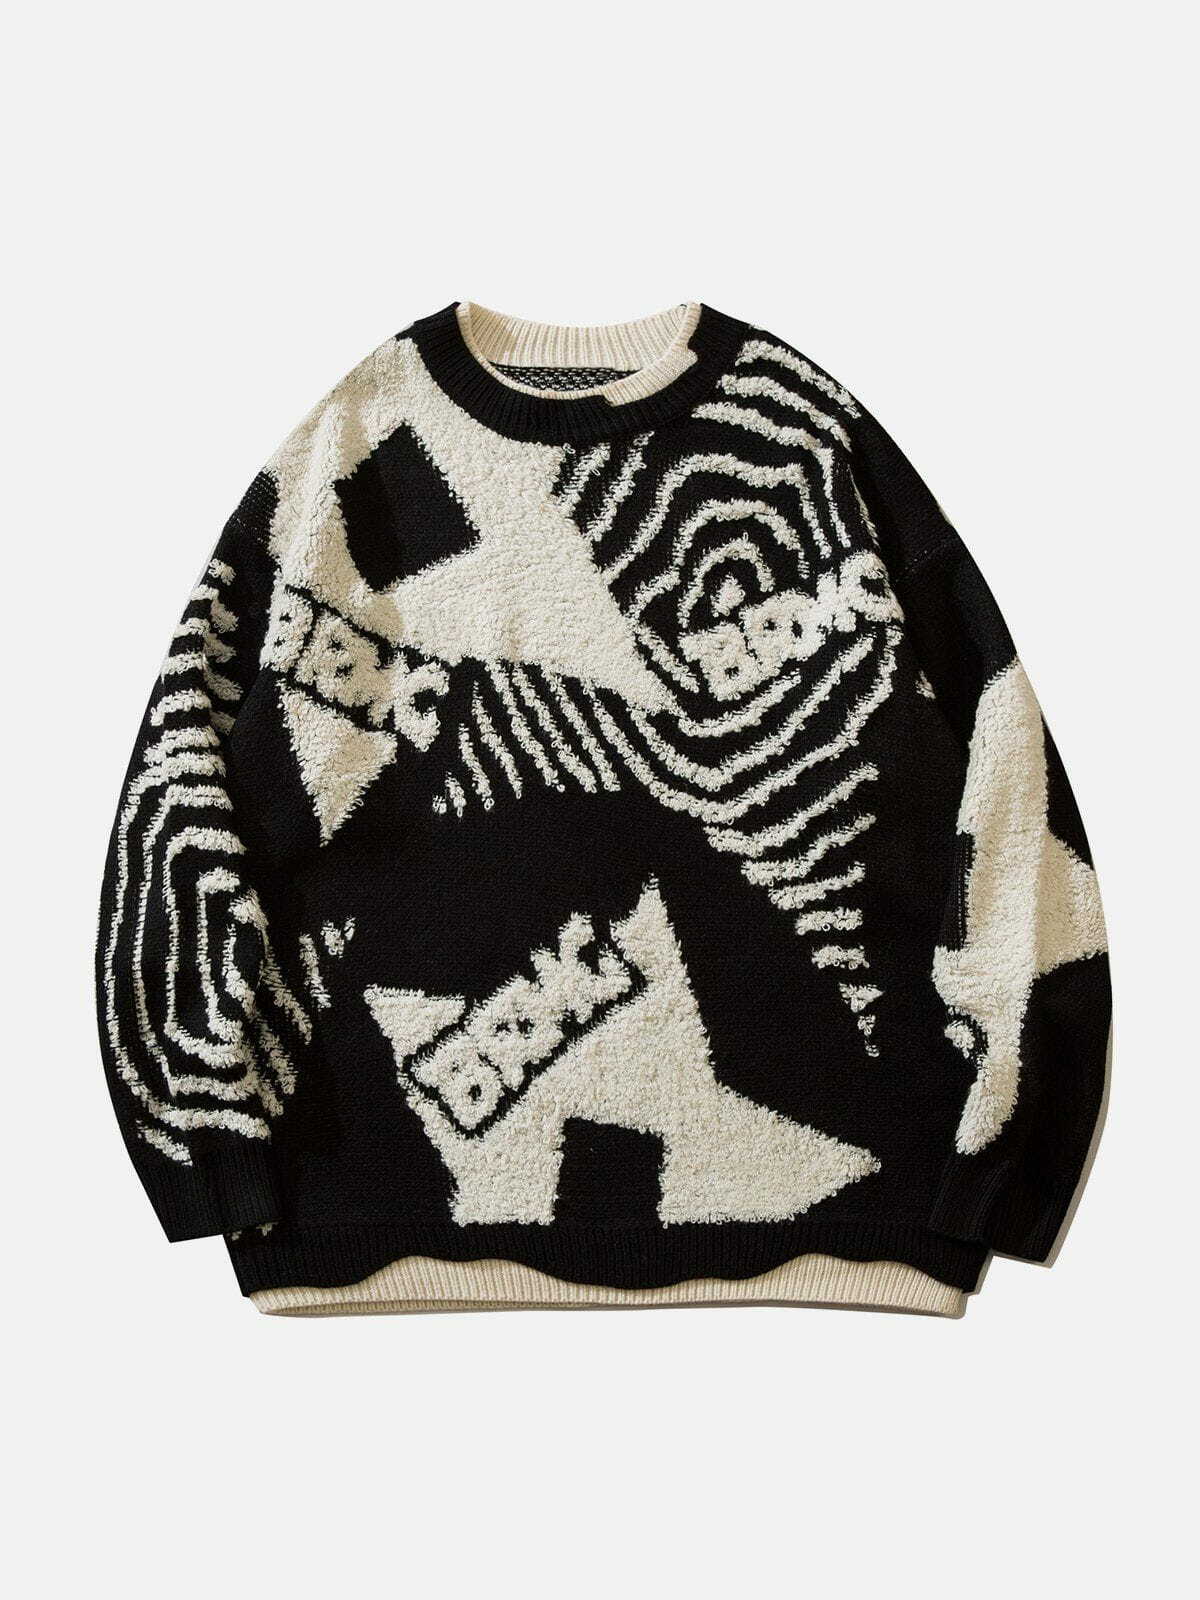 flocked patchwork sweater edgy streetwear statement 5269